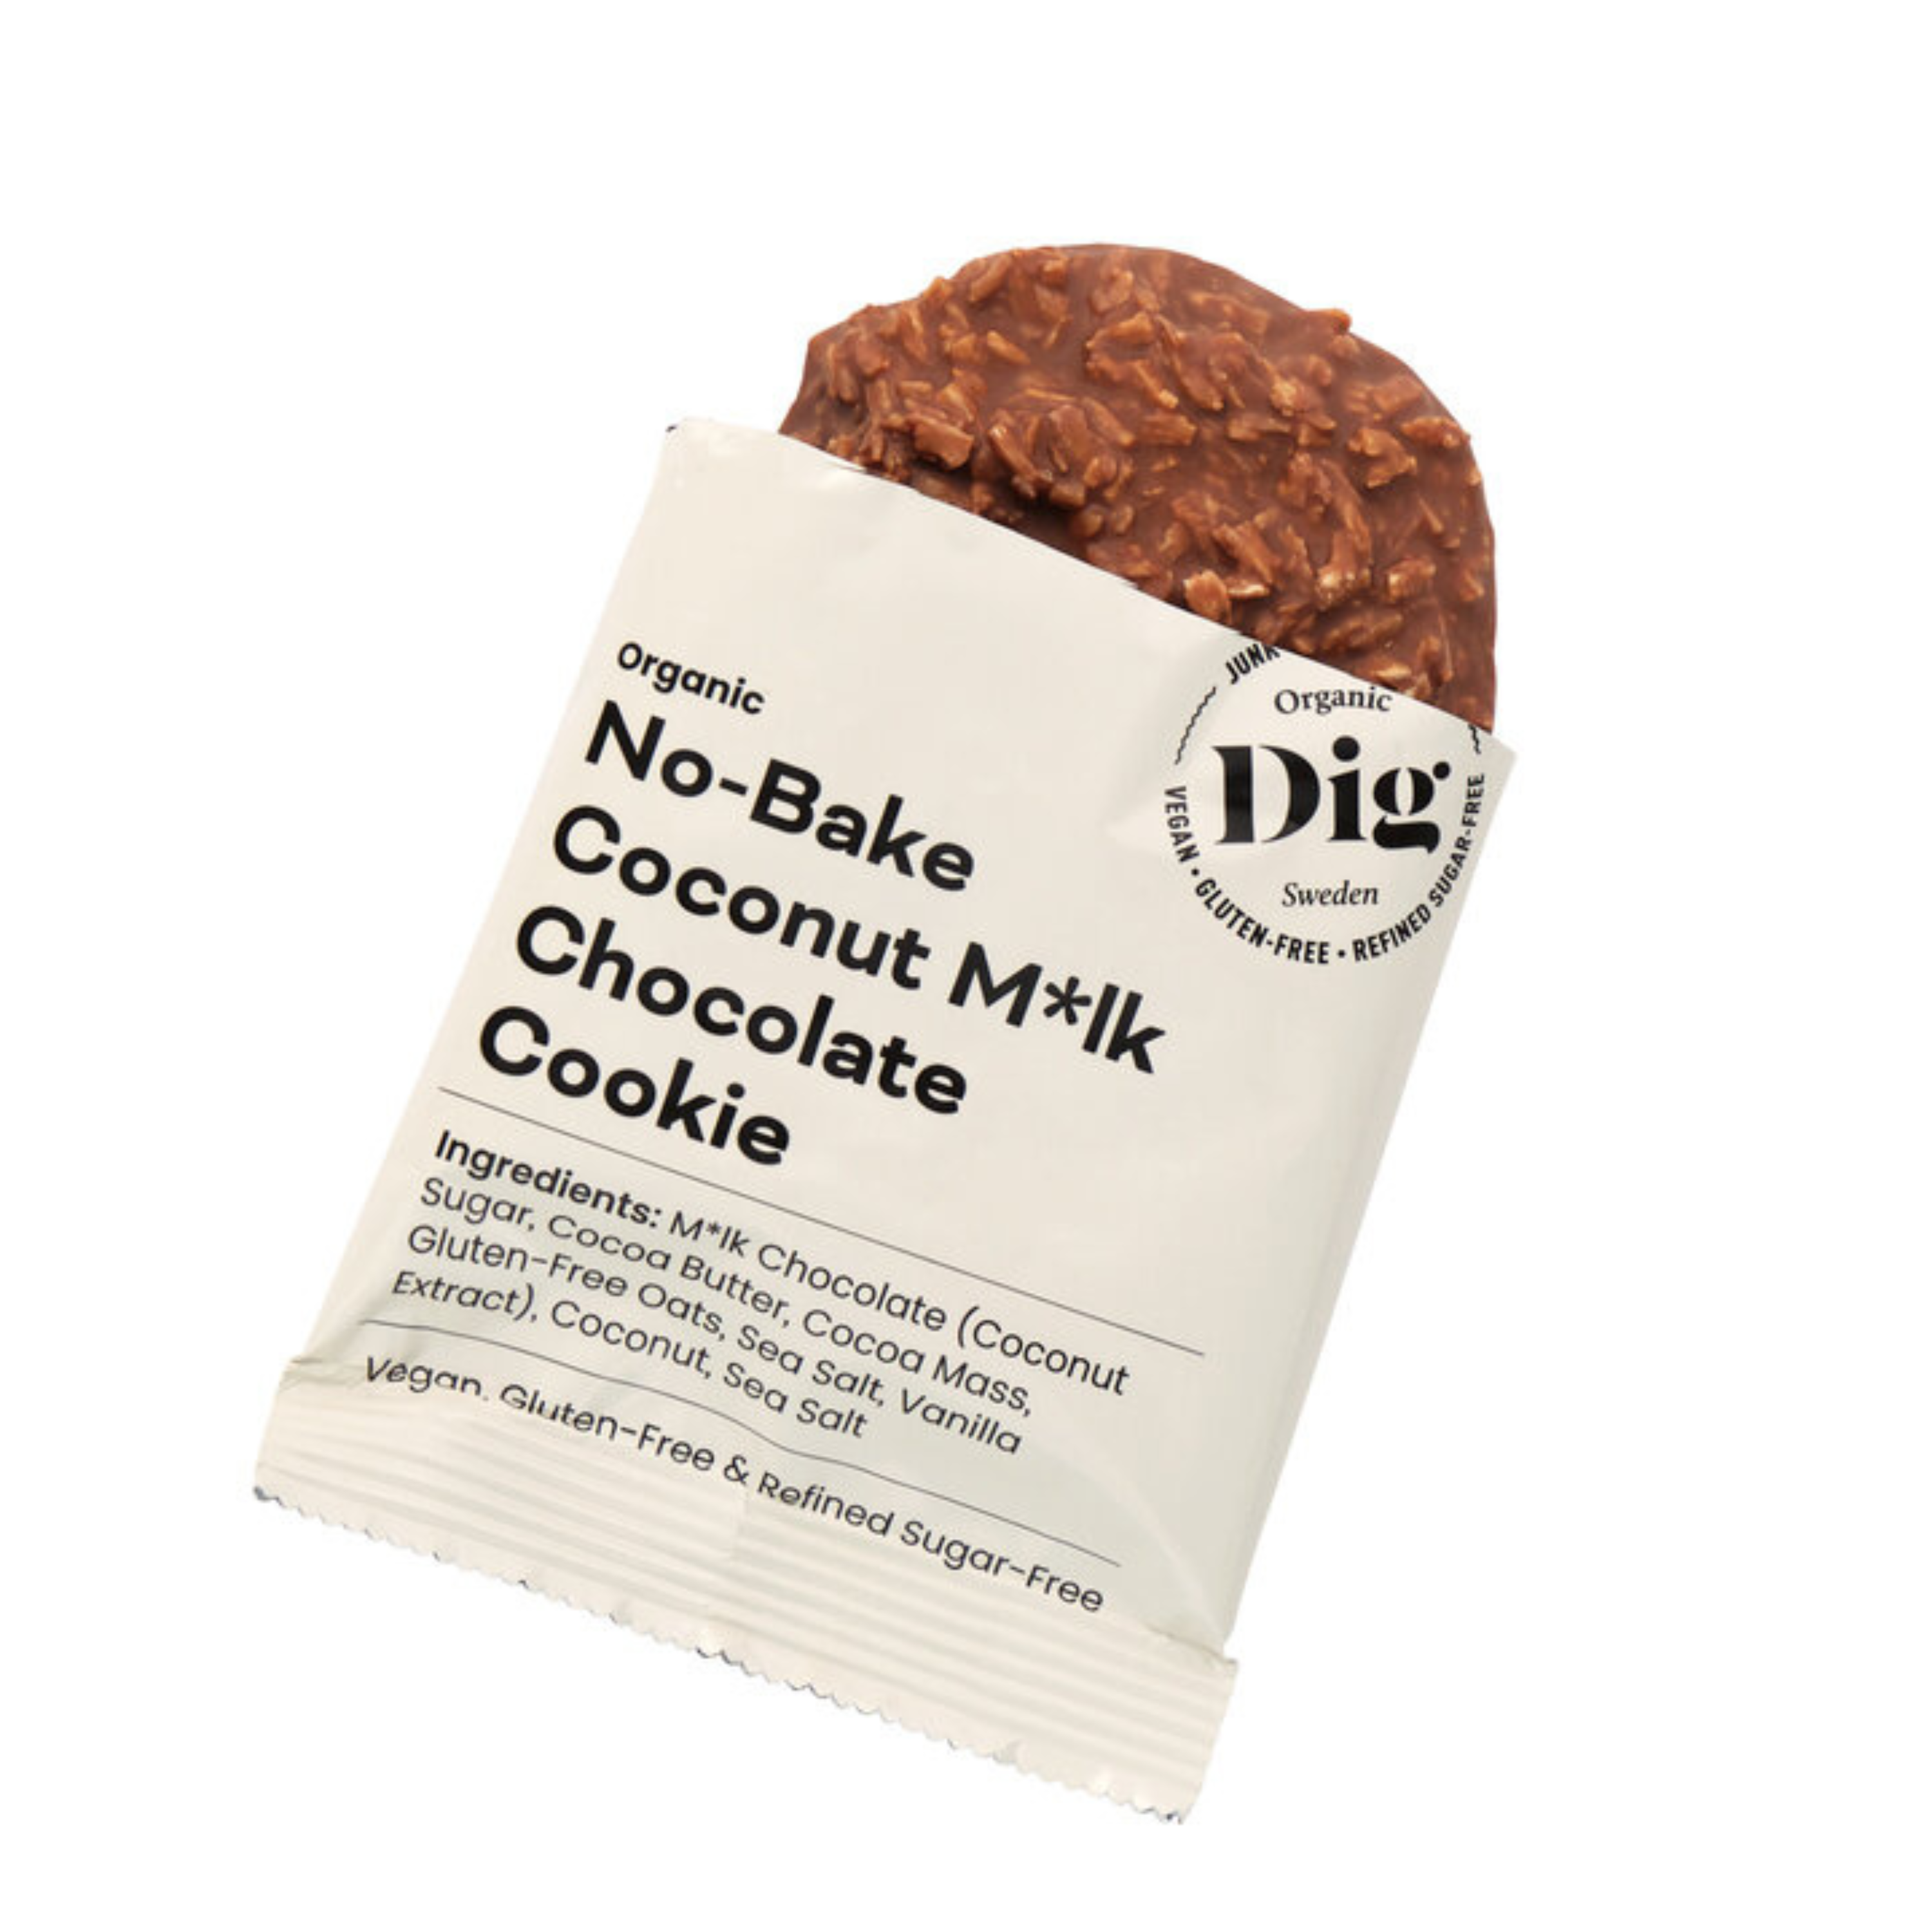 Coconut M*lk Chocolate Cookie 30g